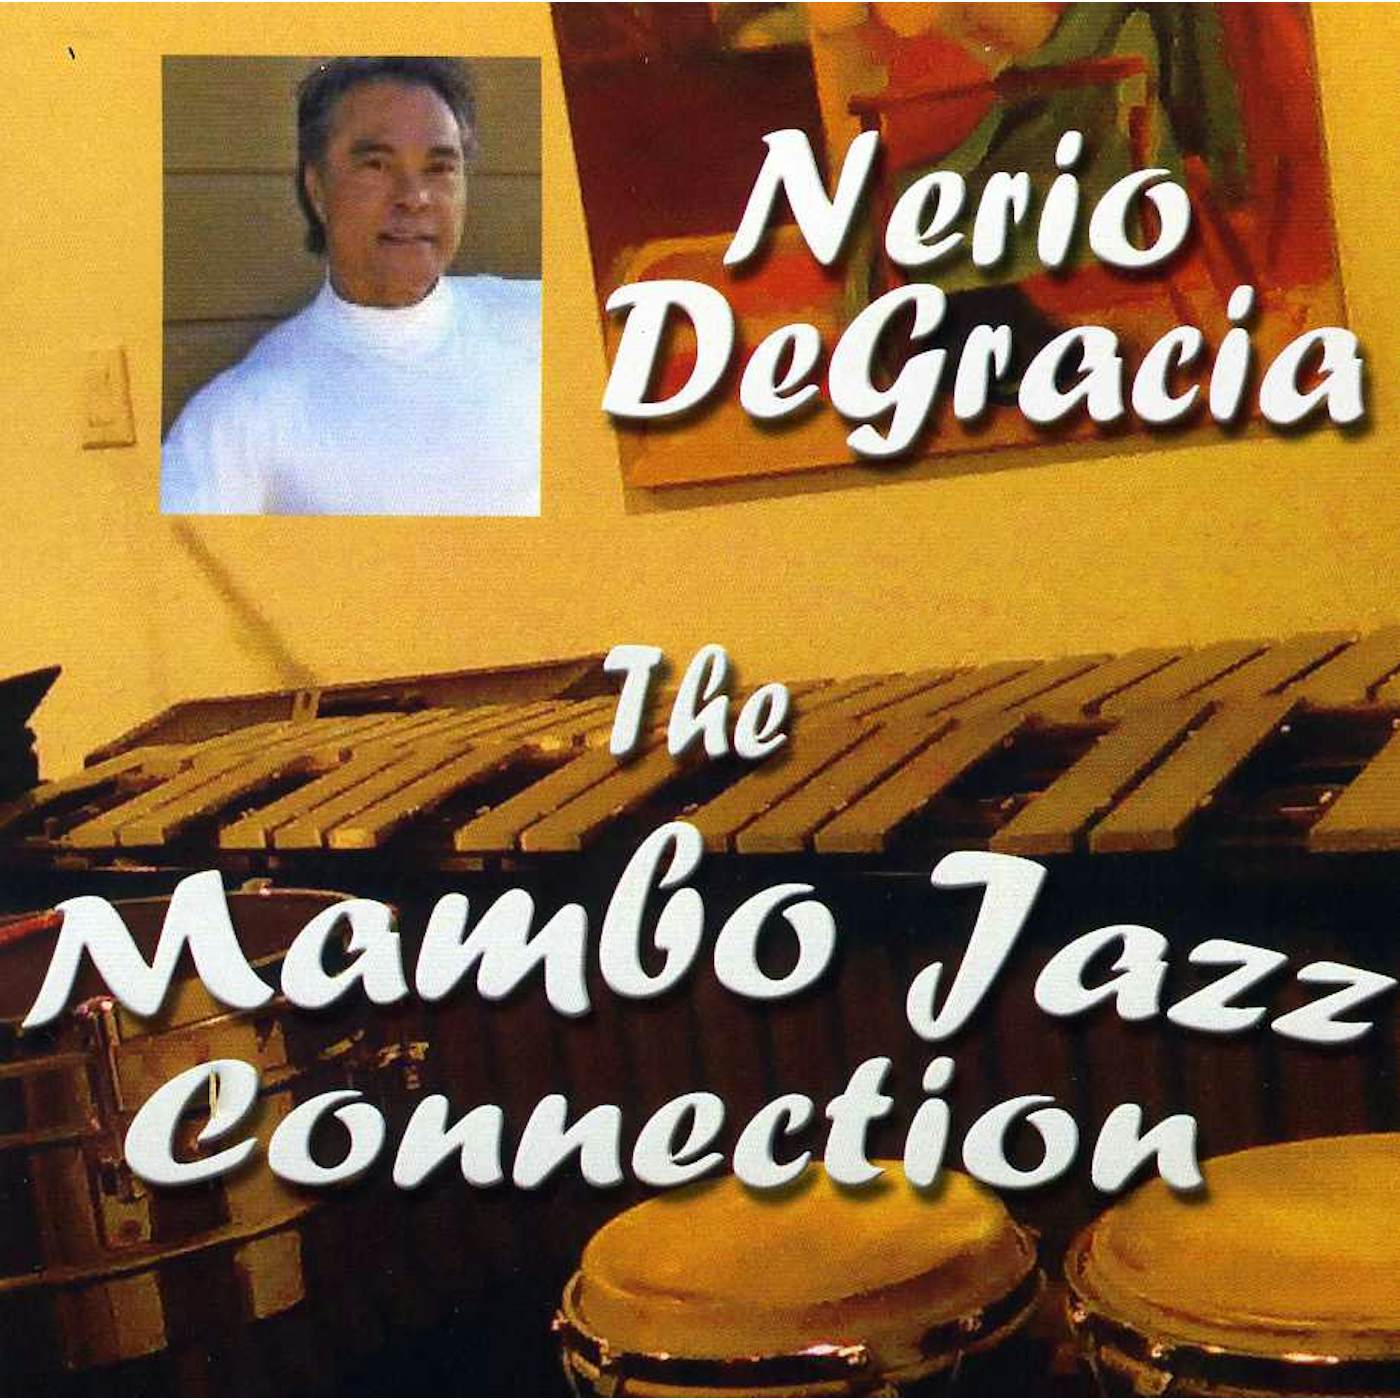 Nerio Degracia MAMBO JAZZ CONNECTION CD